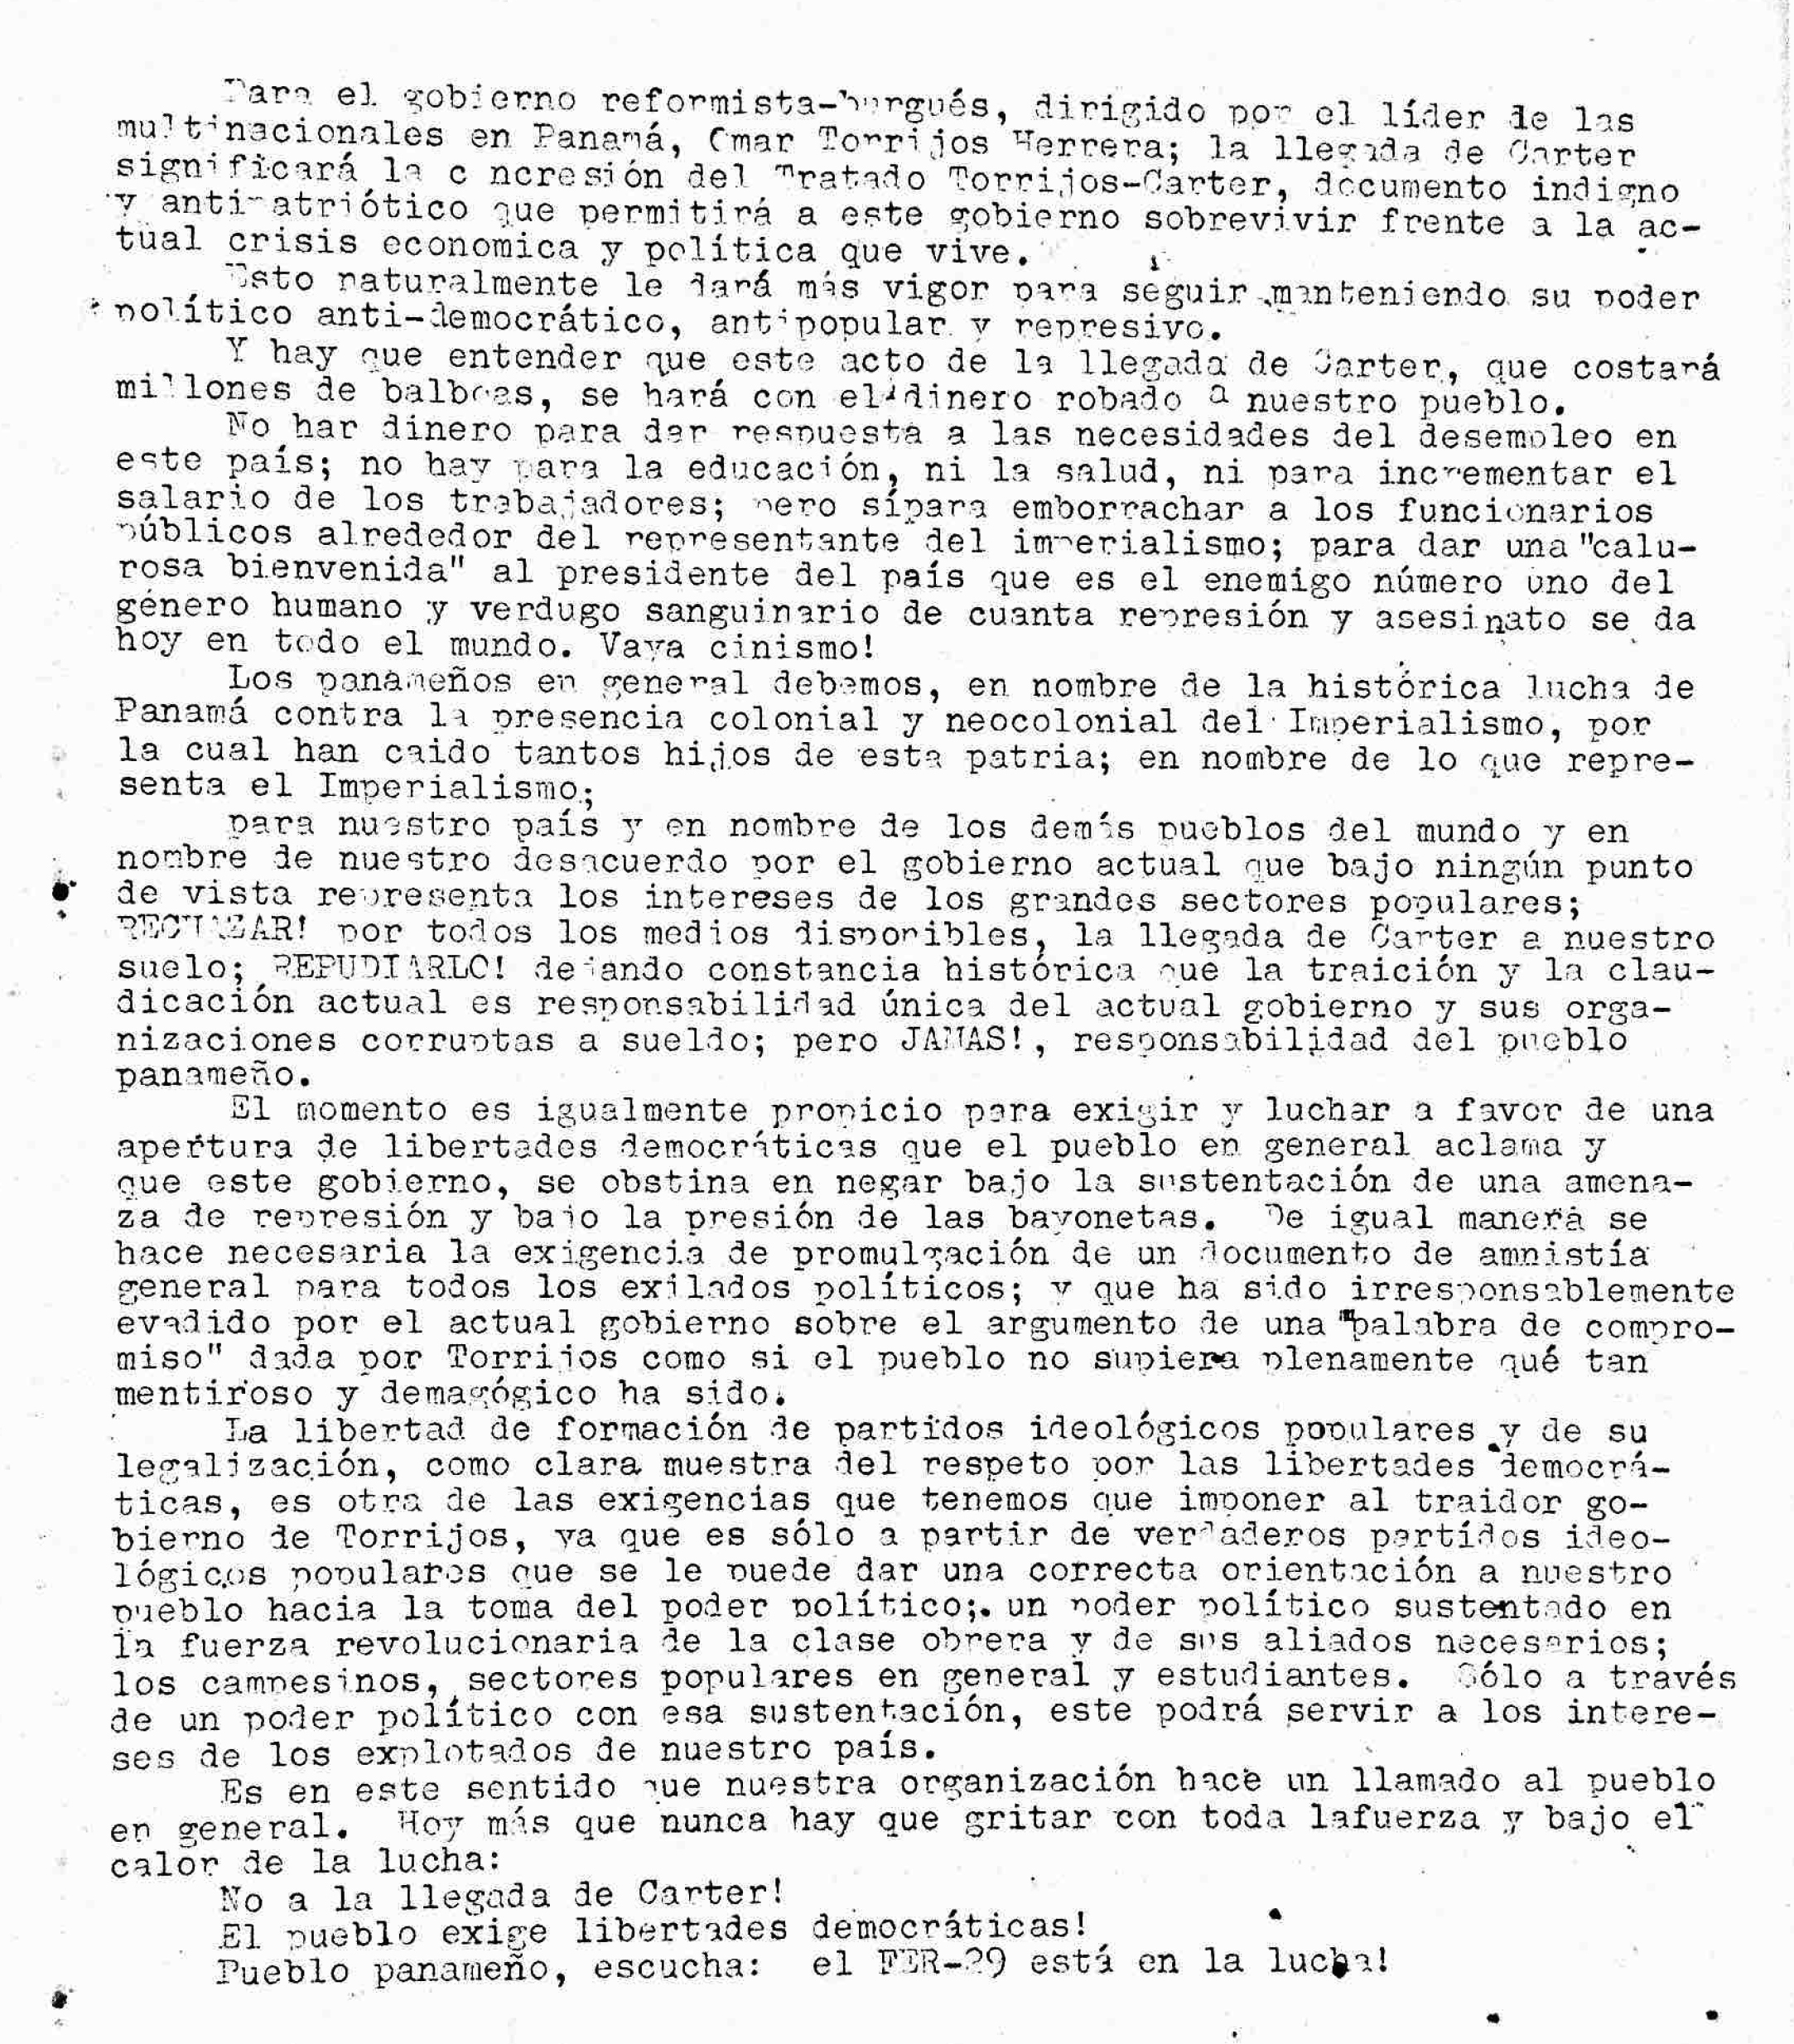 black and white typewritten proclamation